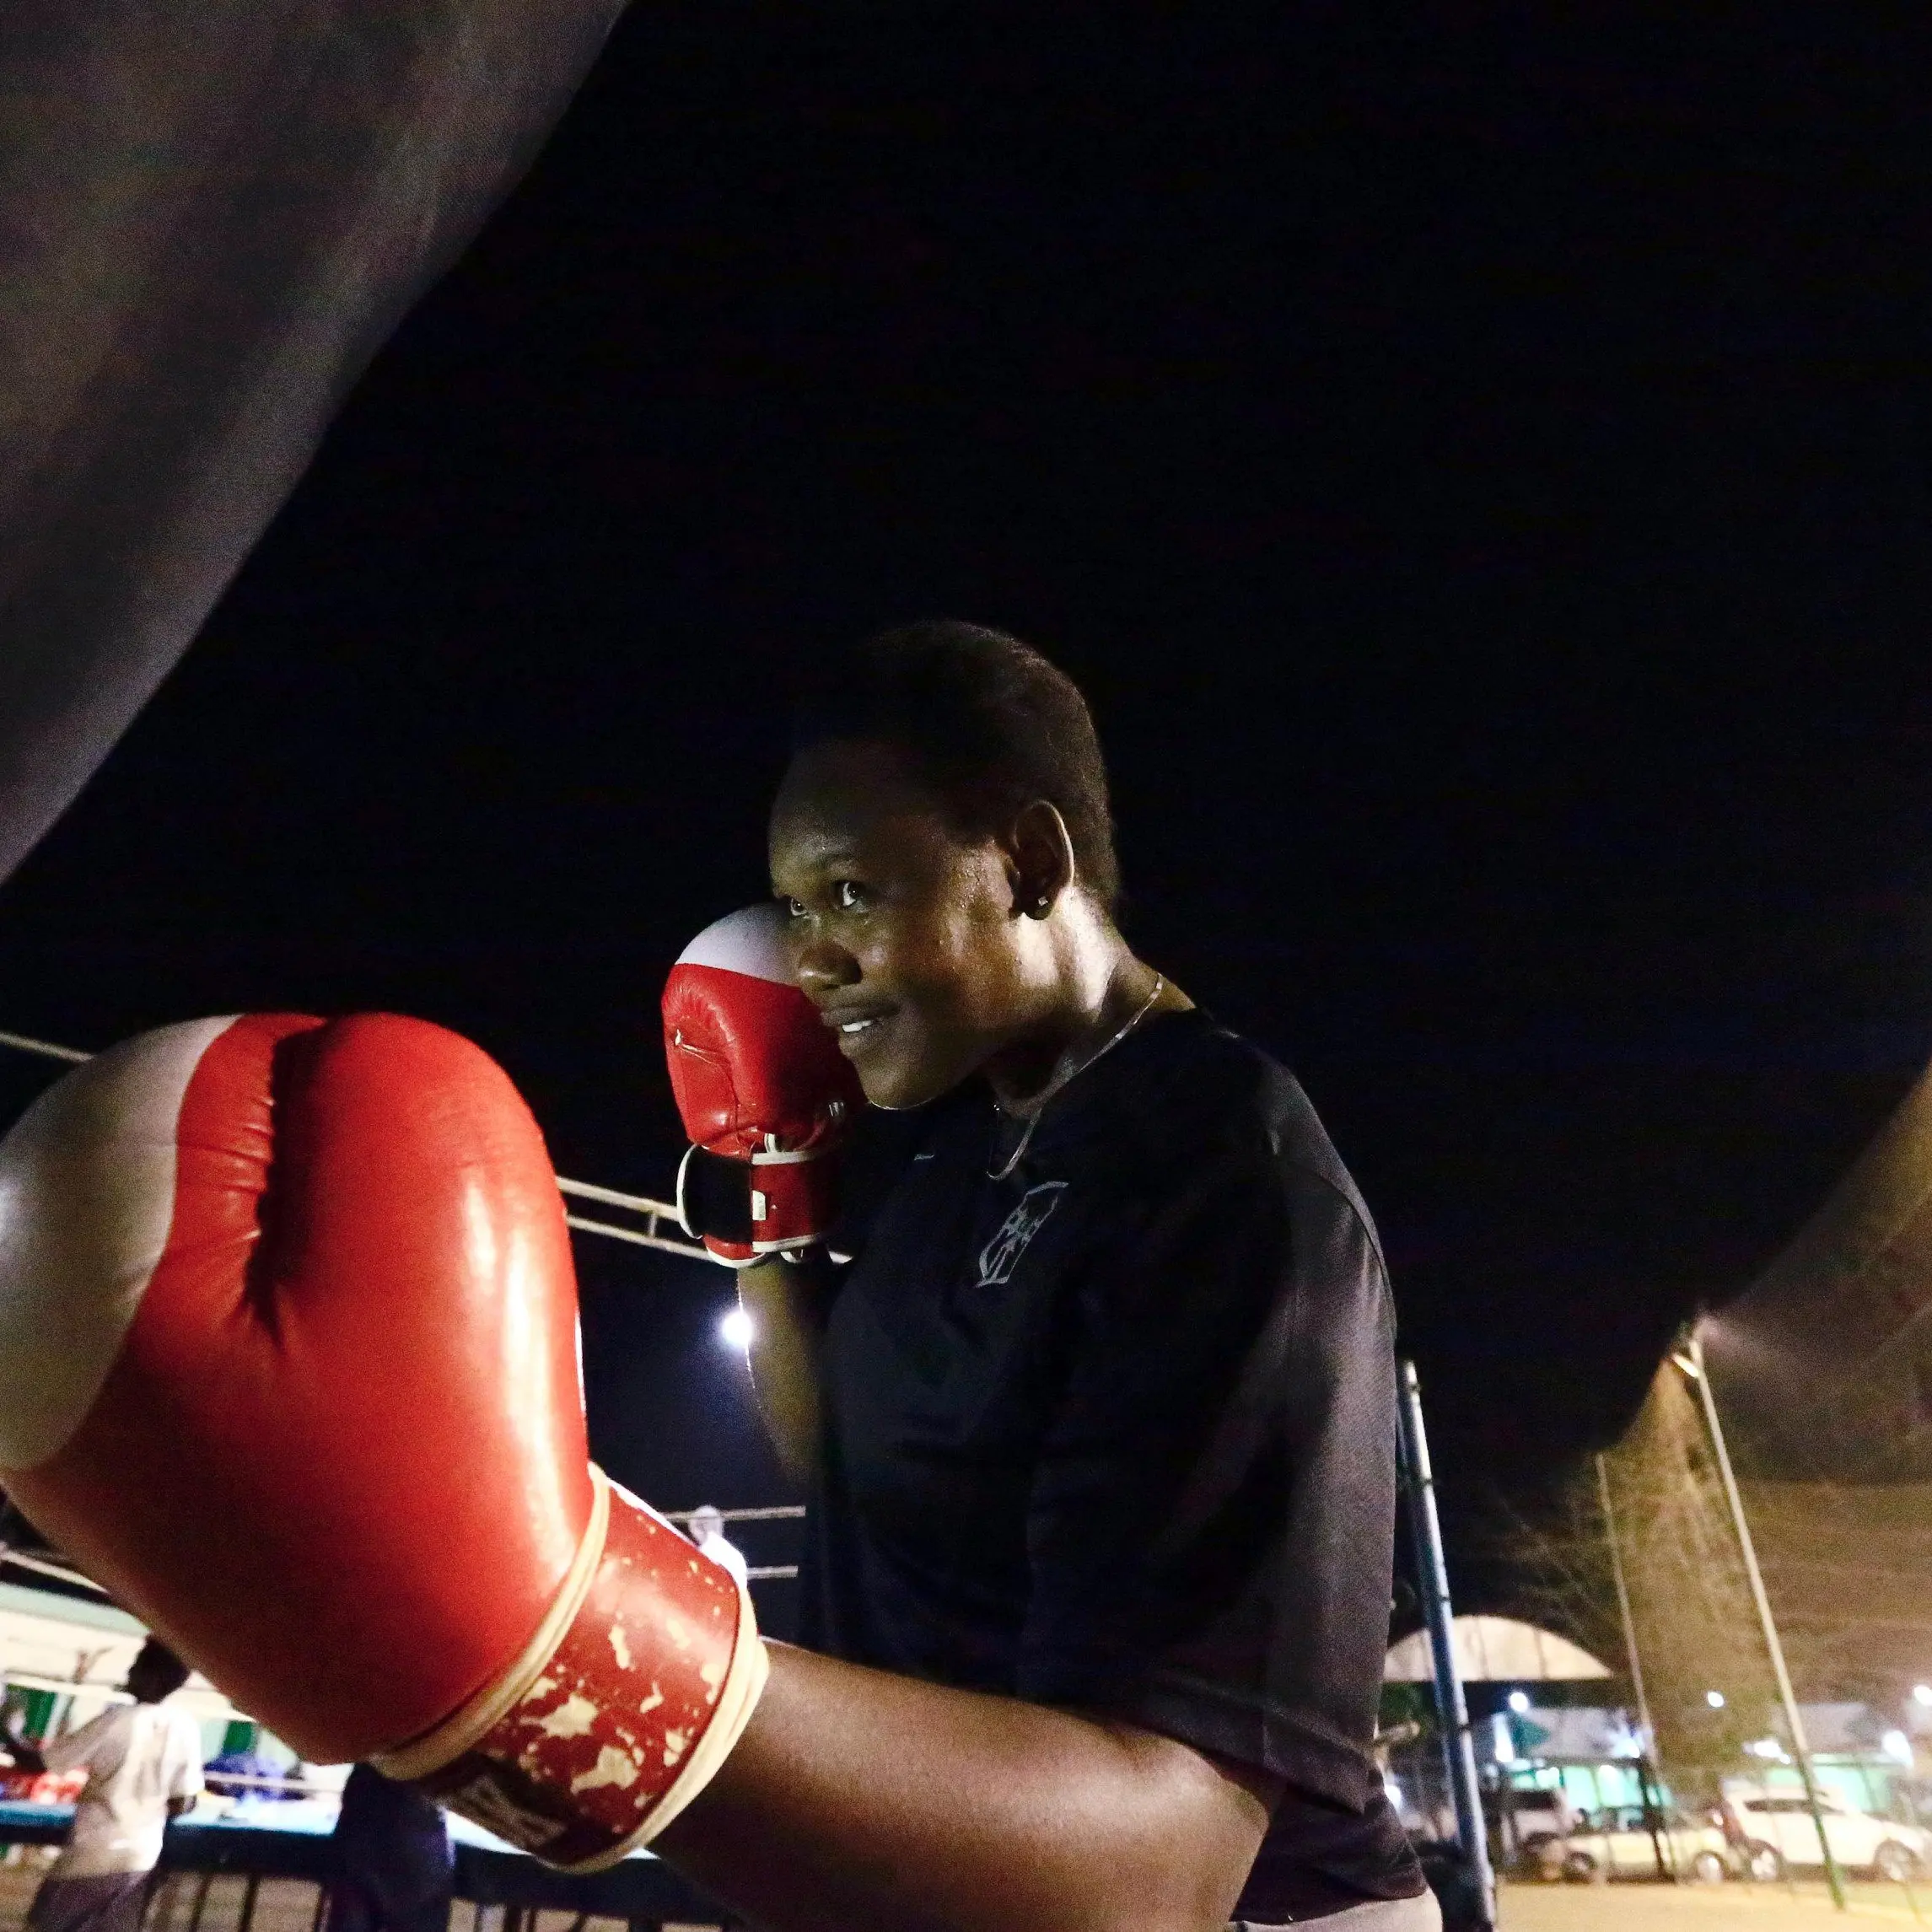 Women boxers punch through social taboos in Sudan